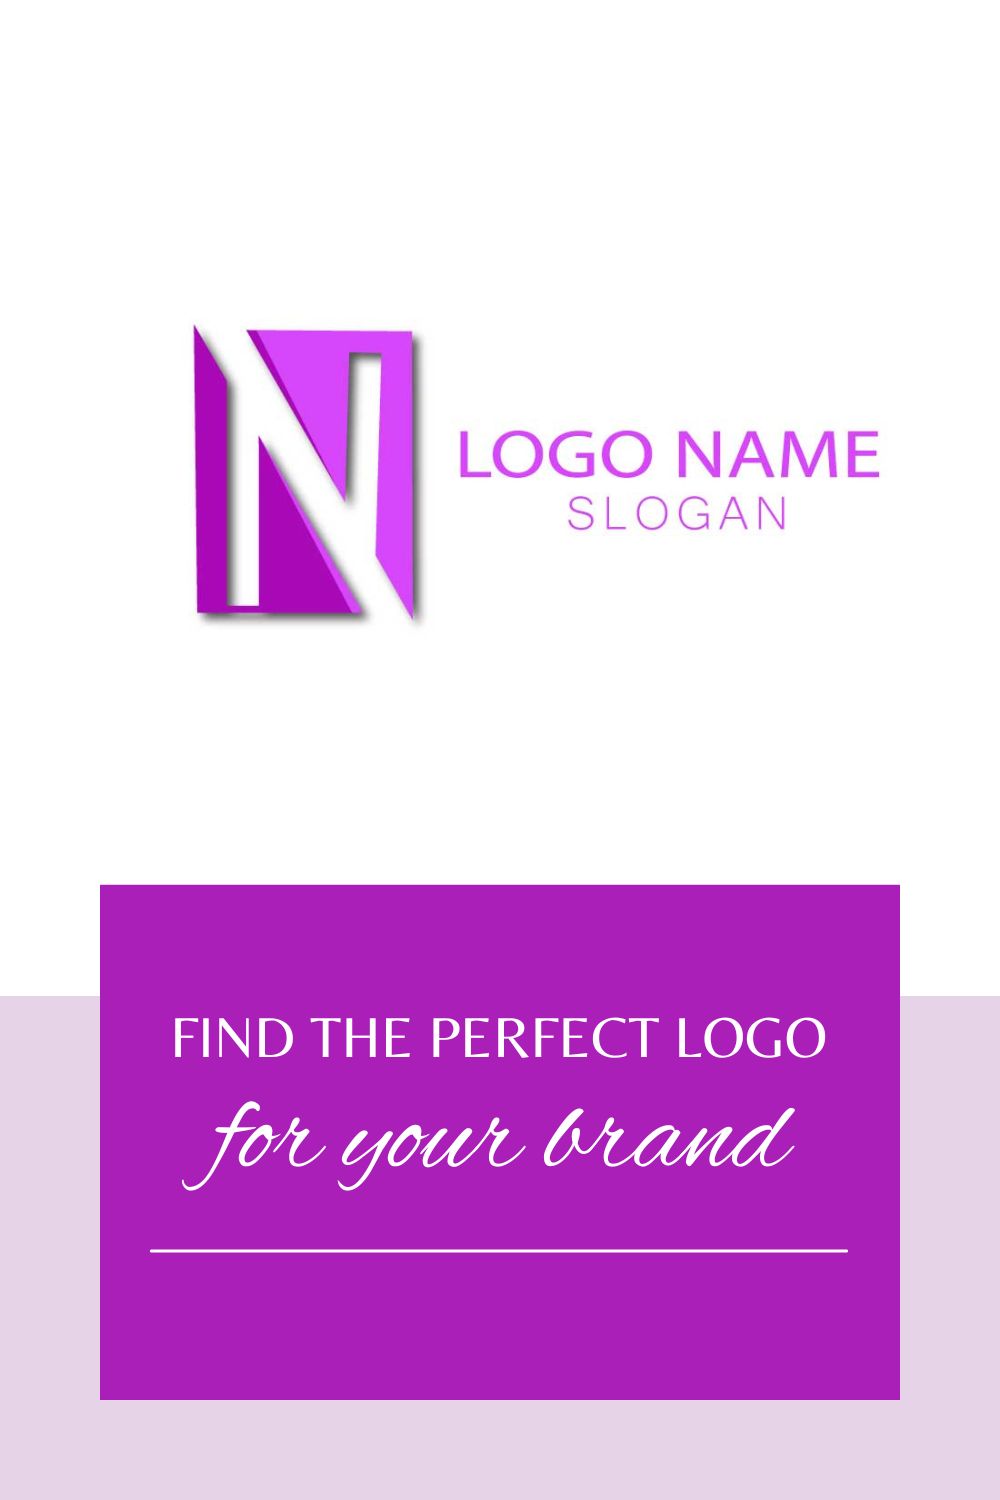 N letter logo and Negative Space Logo pinterest image.